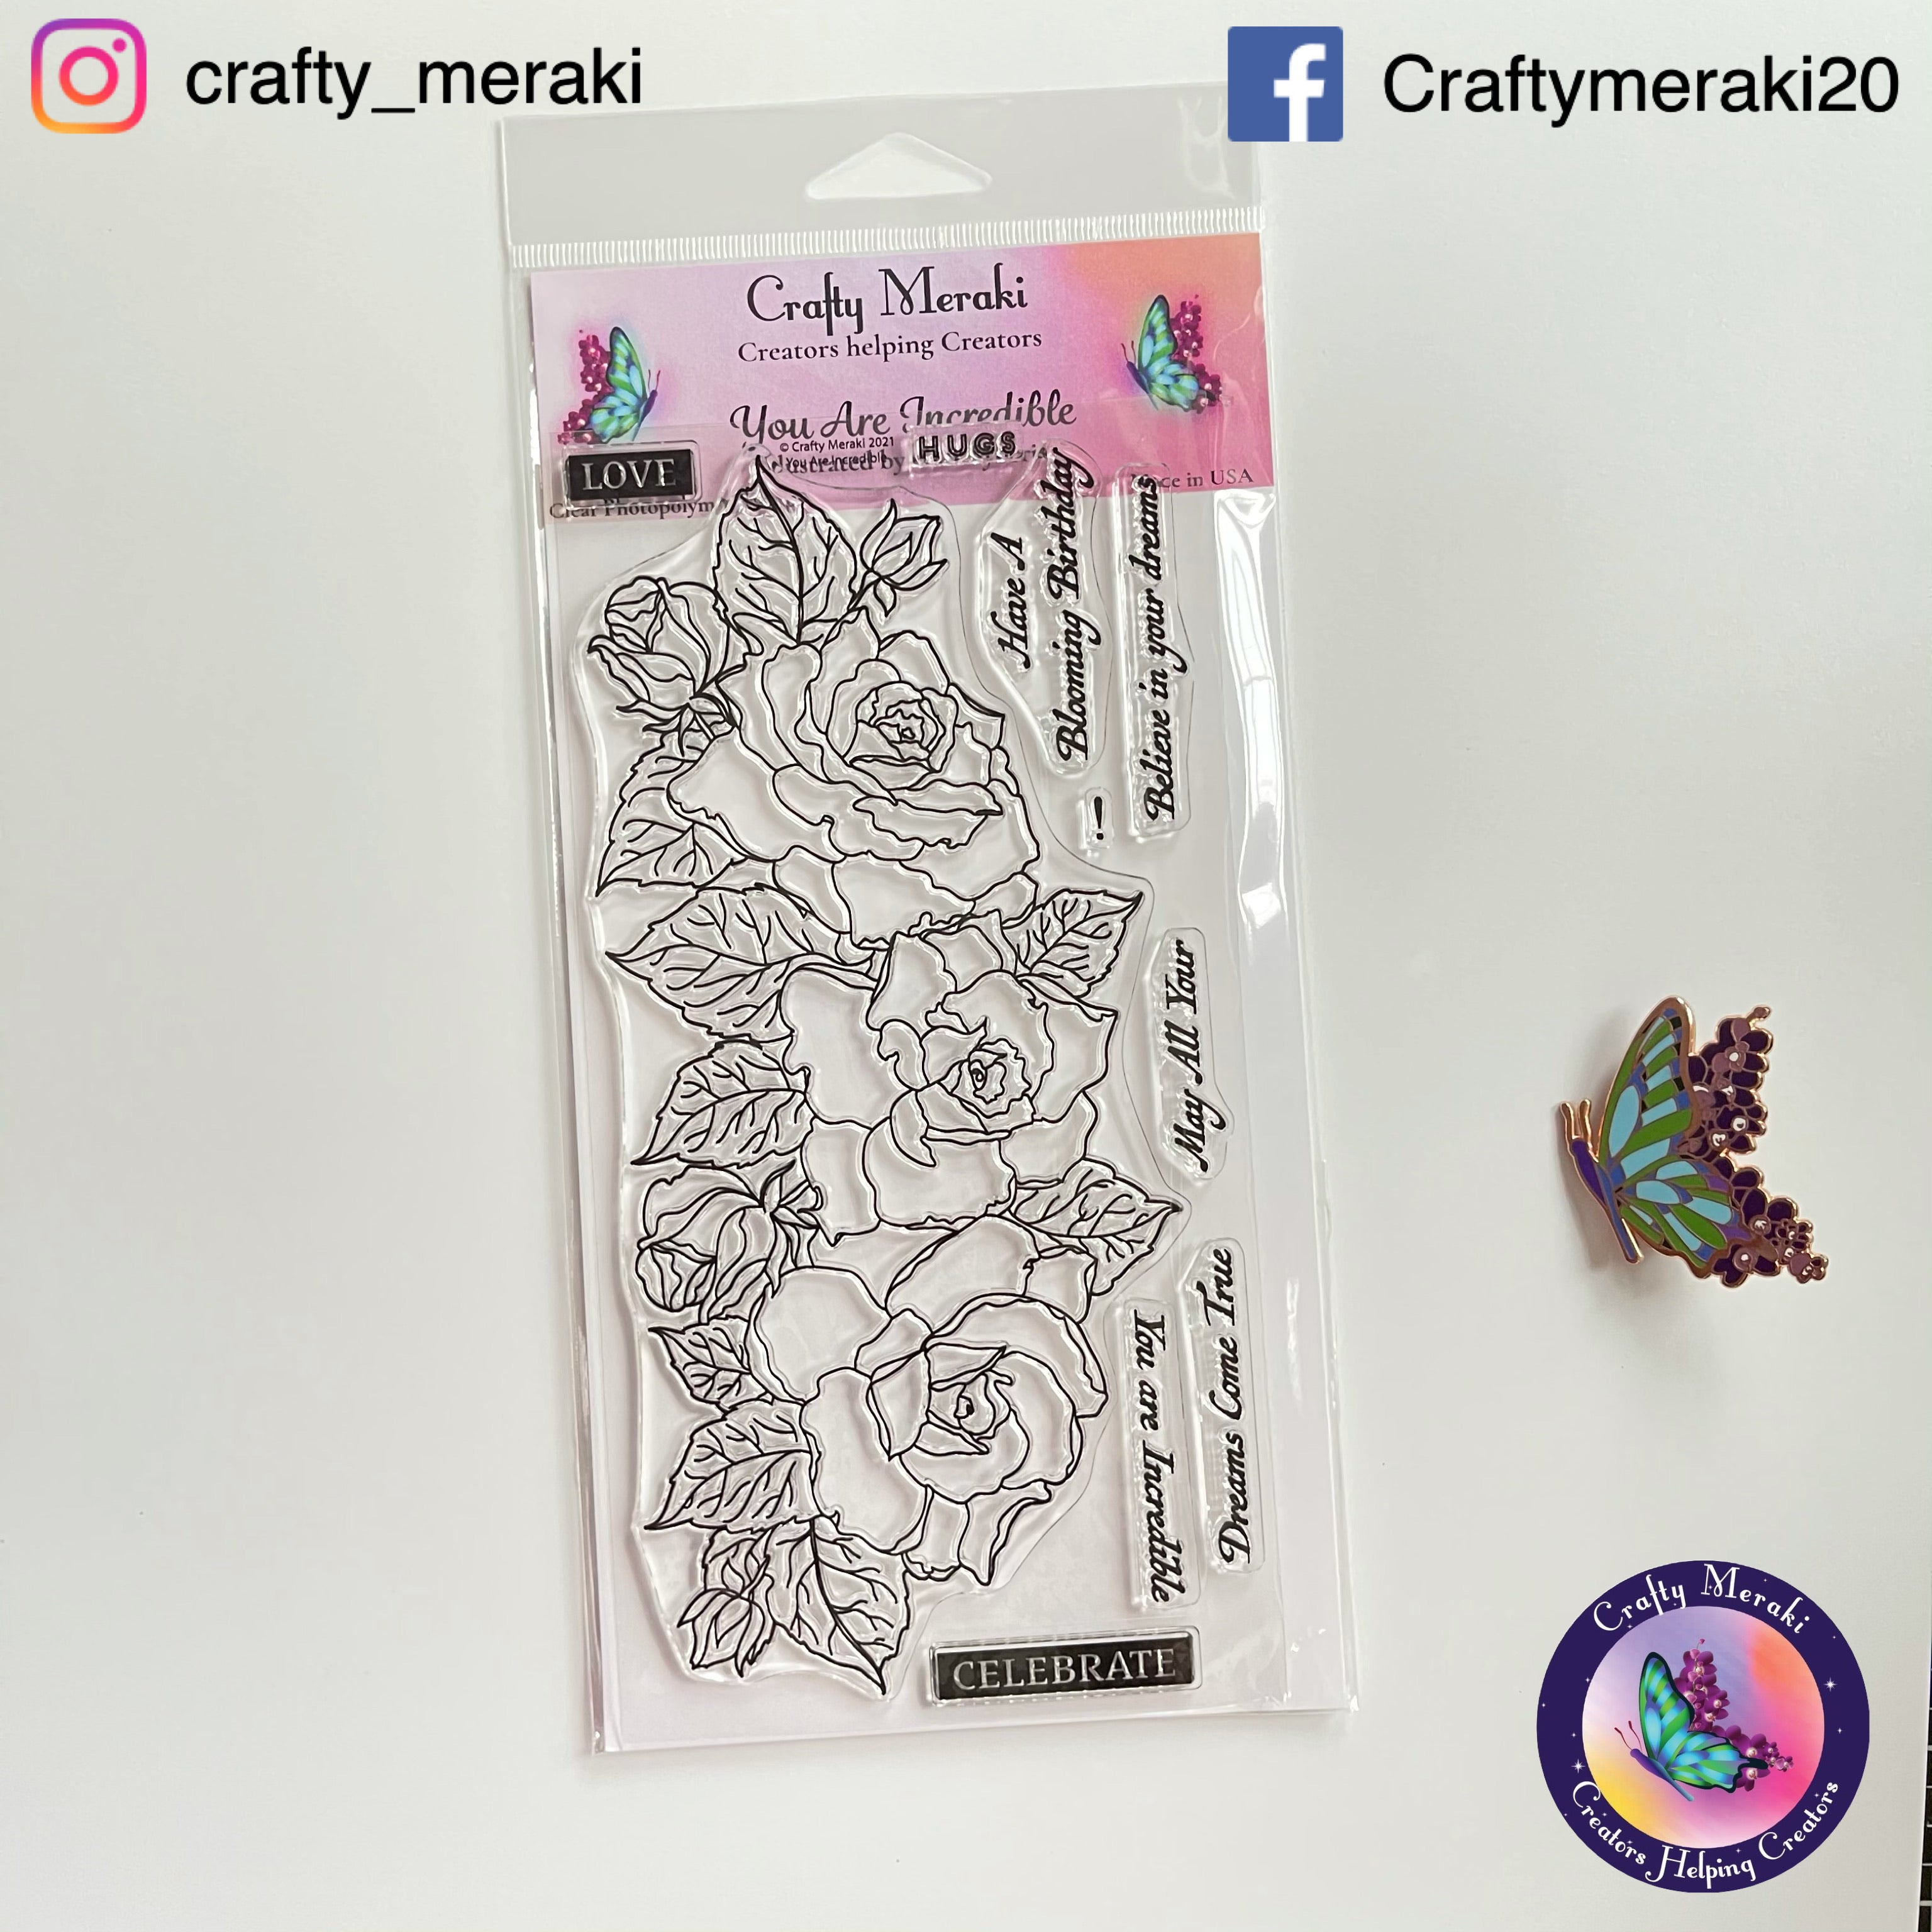 Crafty Meraki You are Incredible Stamp set - Crafty Meraki